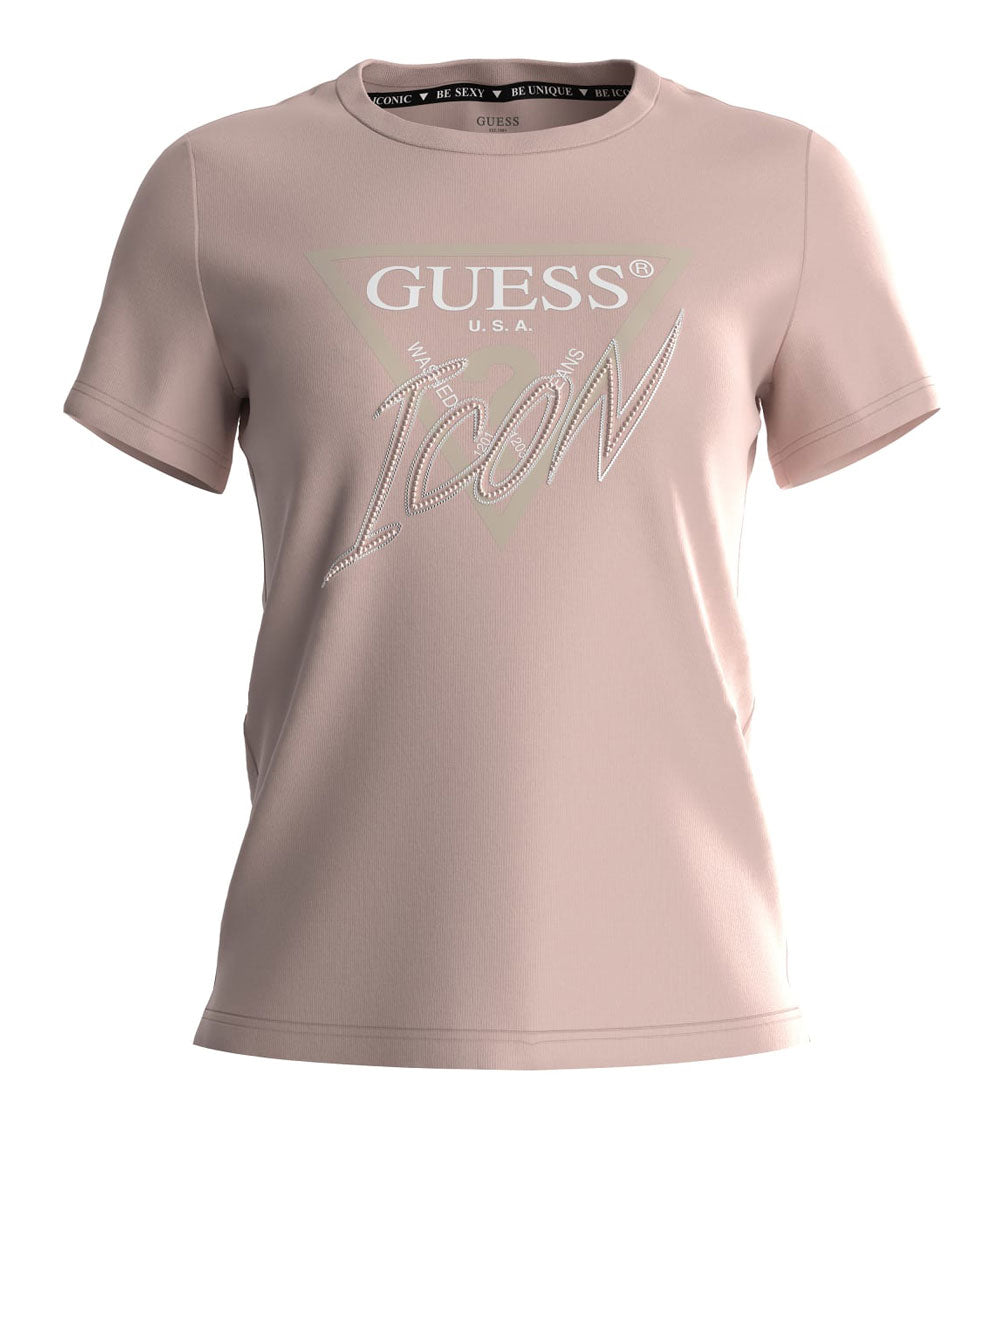 GUESS T-shirt Donna - Rosa